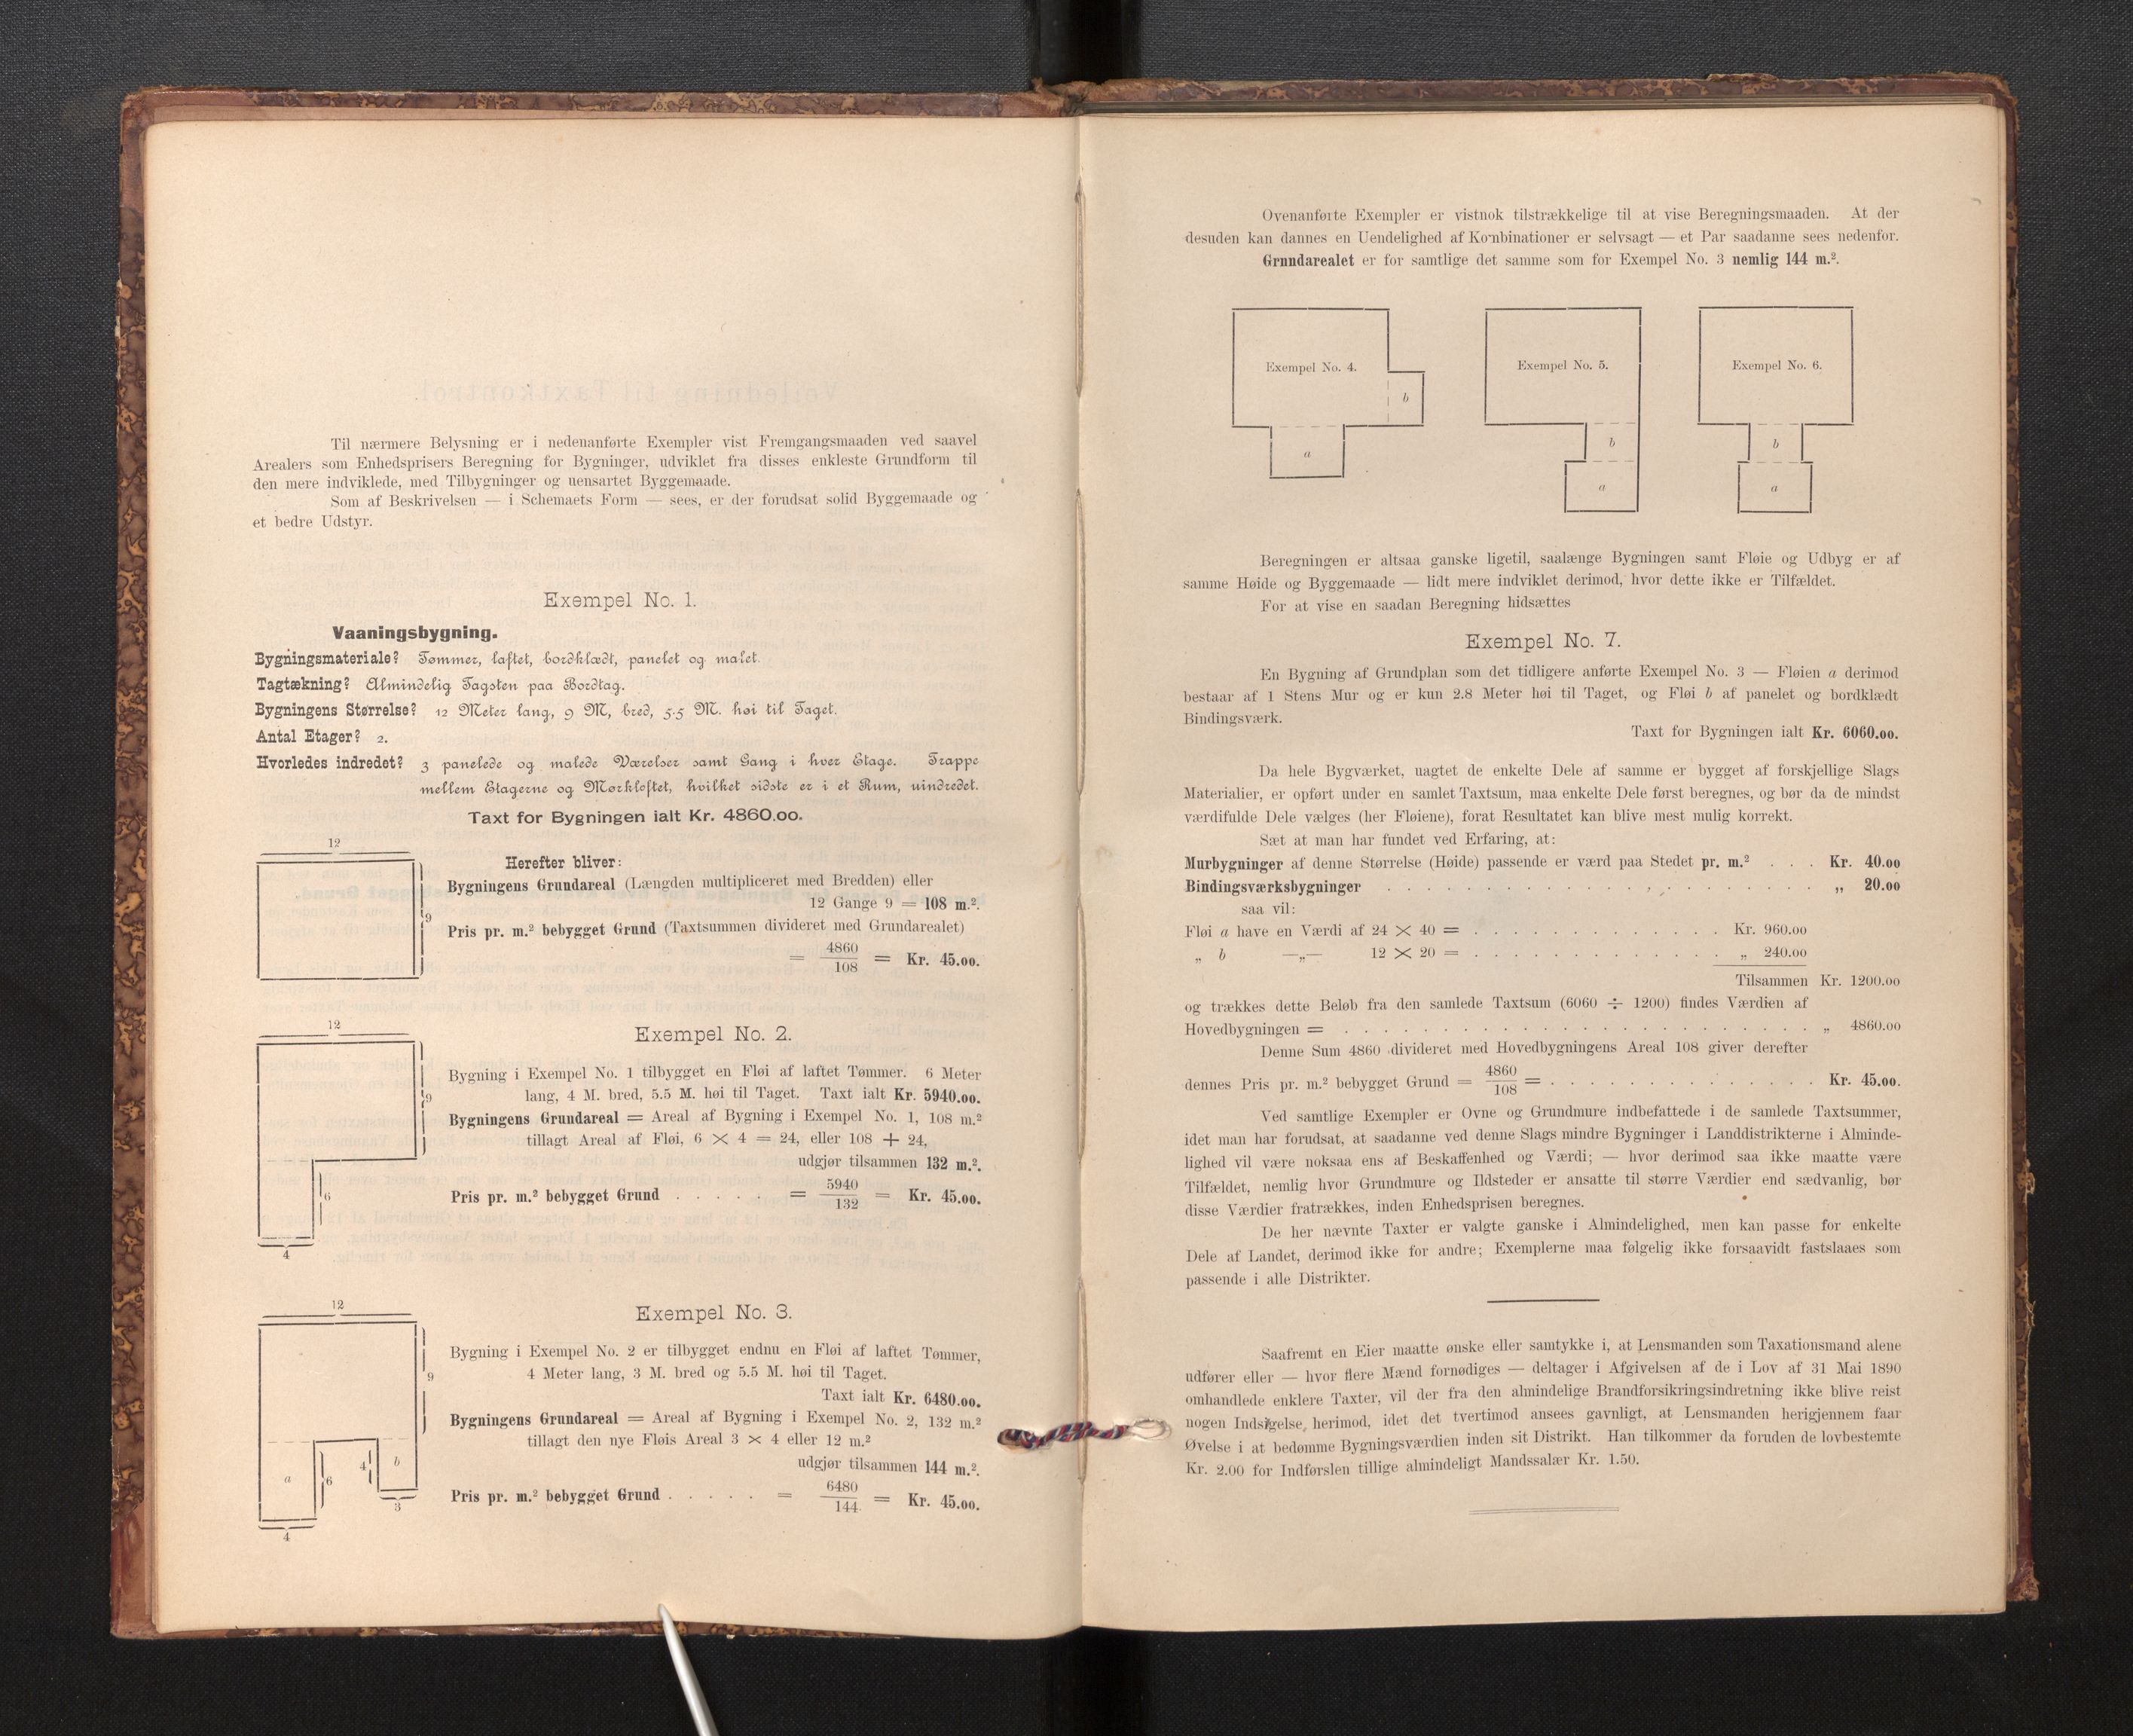 Lensmannen i Fjaler, SAB/A-27201/0012/L0006: Branntakstprotokoll, skjematakst, 1895-1937